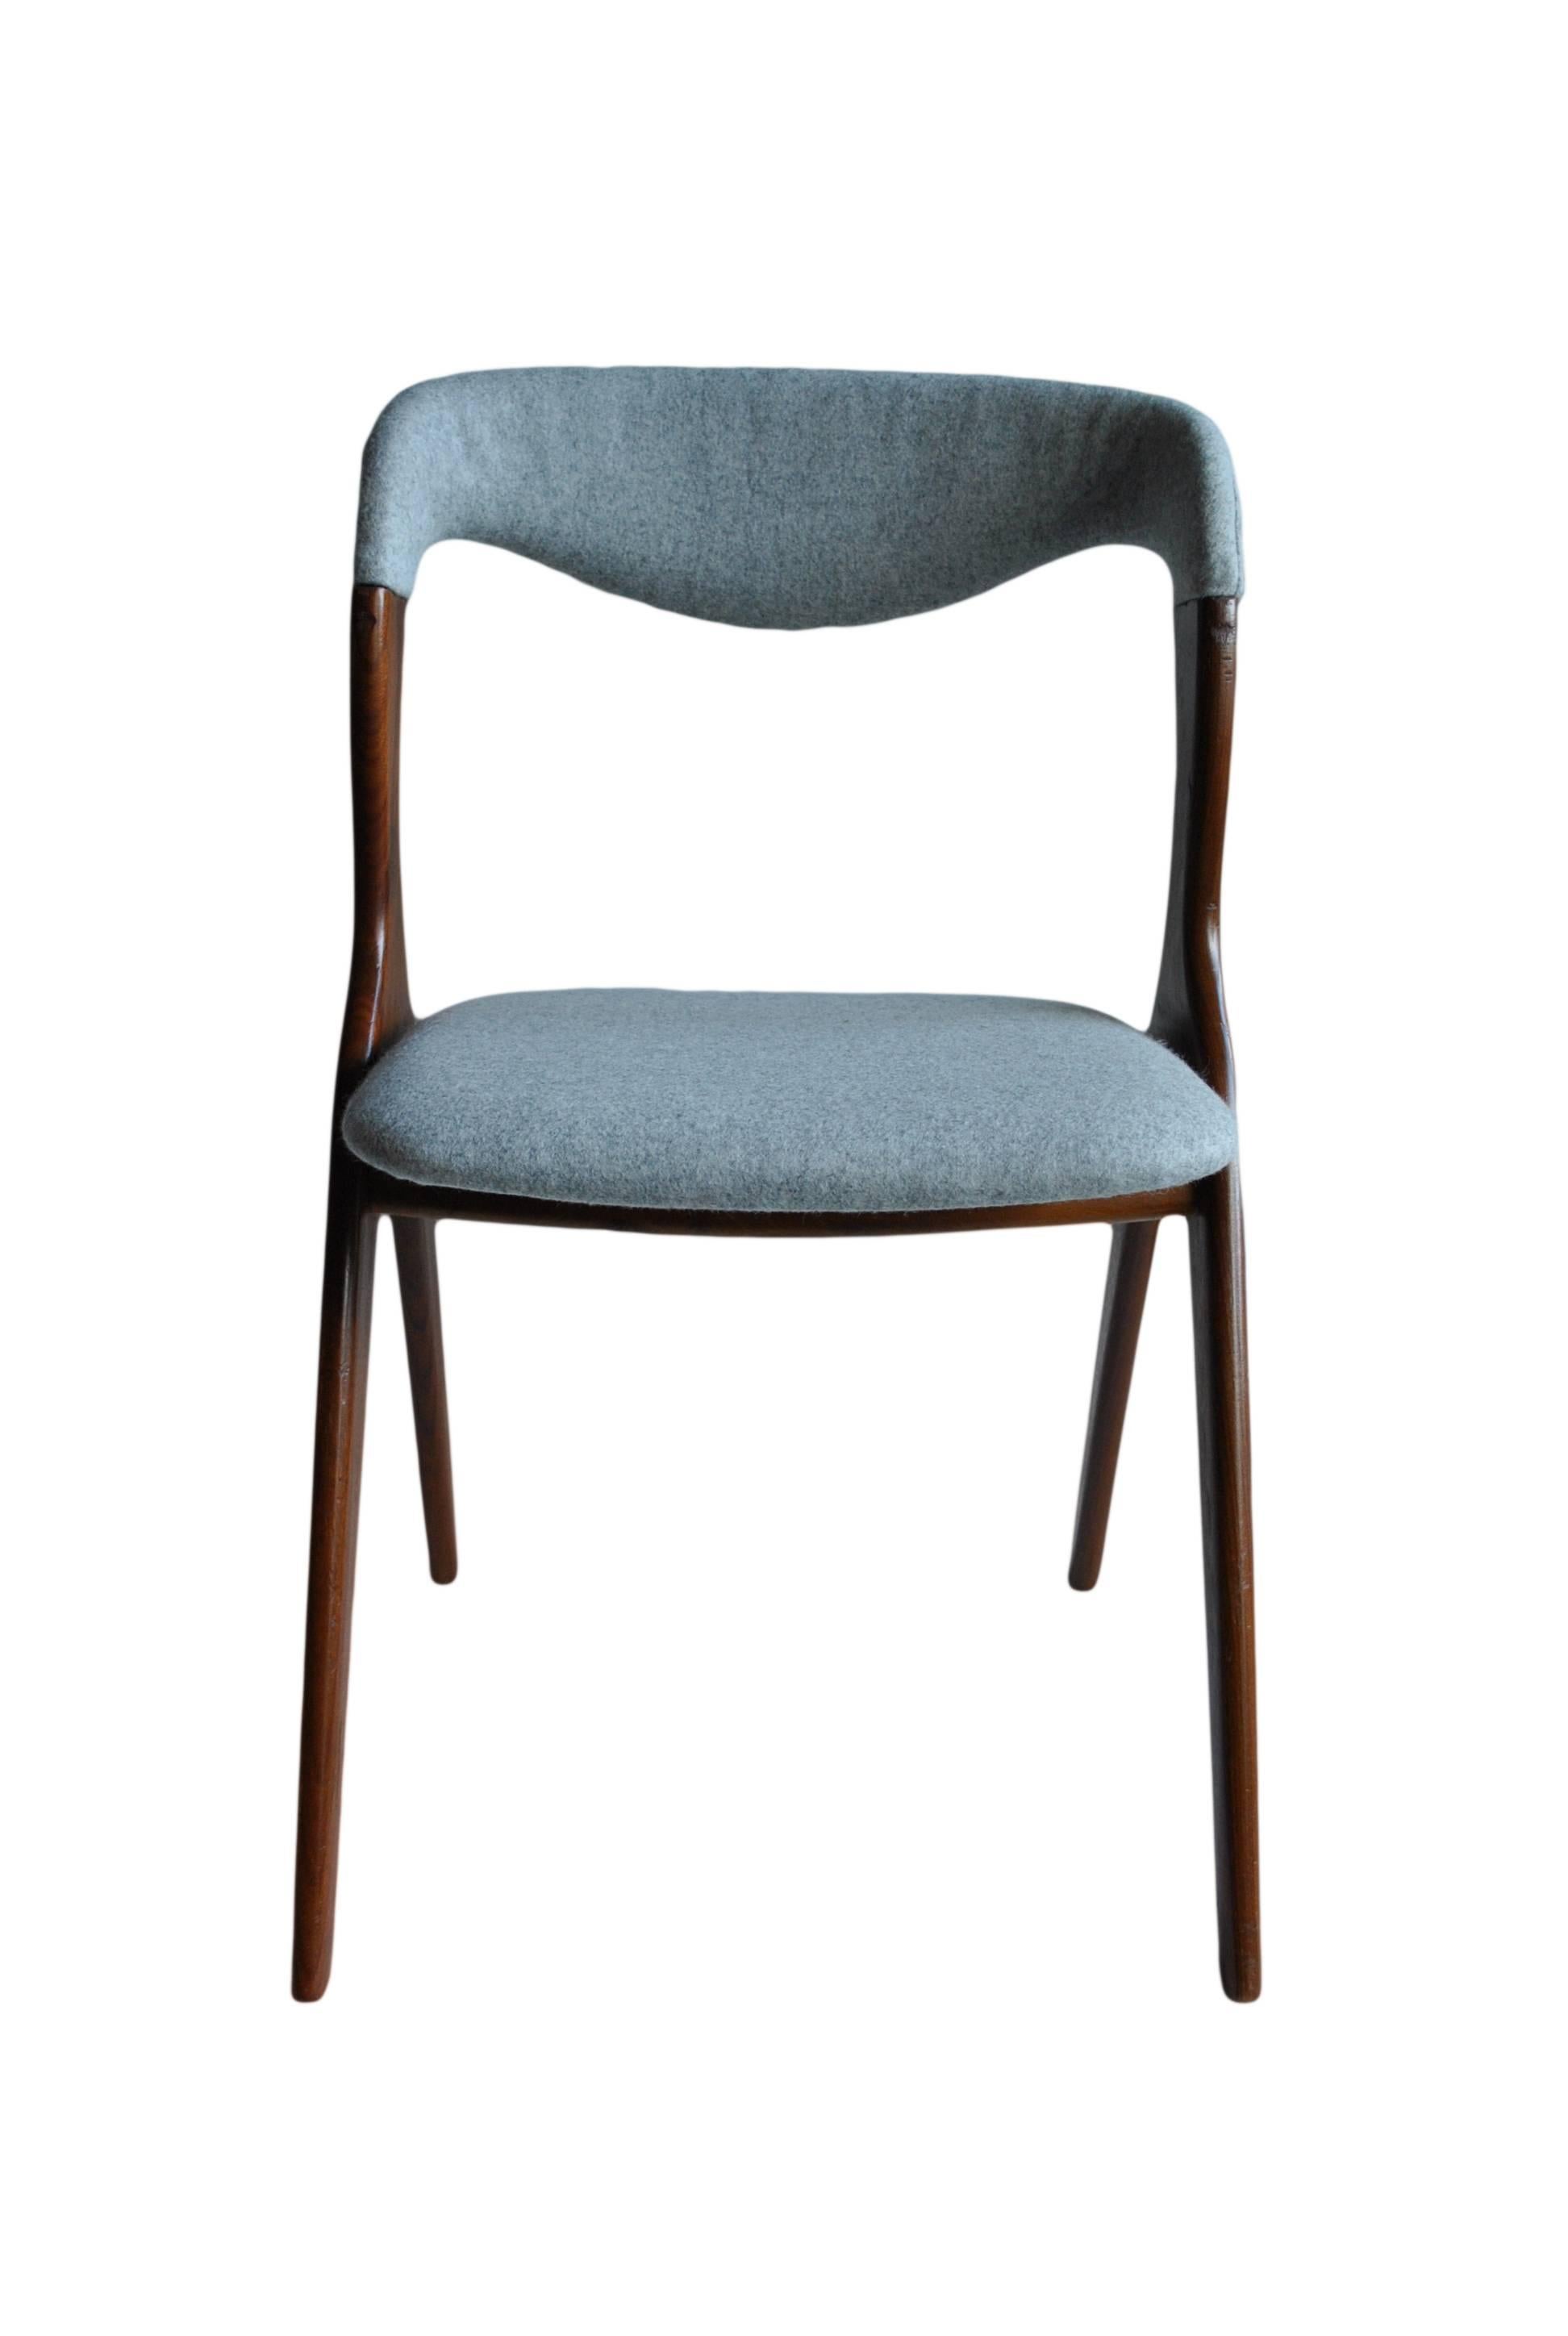 Danish Midcentury Dining Chairs, set of eight. Restored. 2